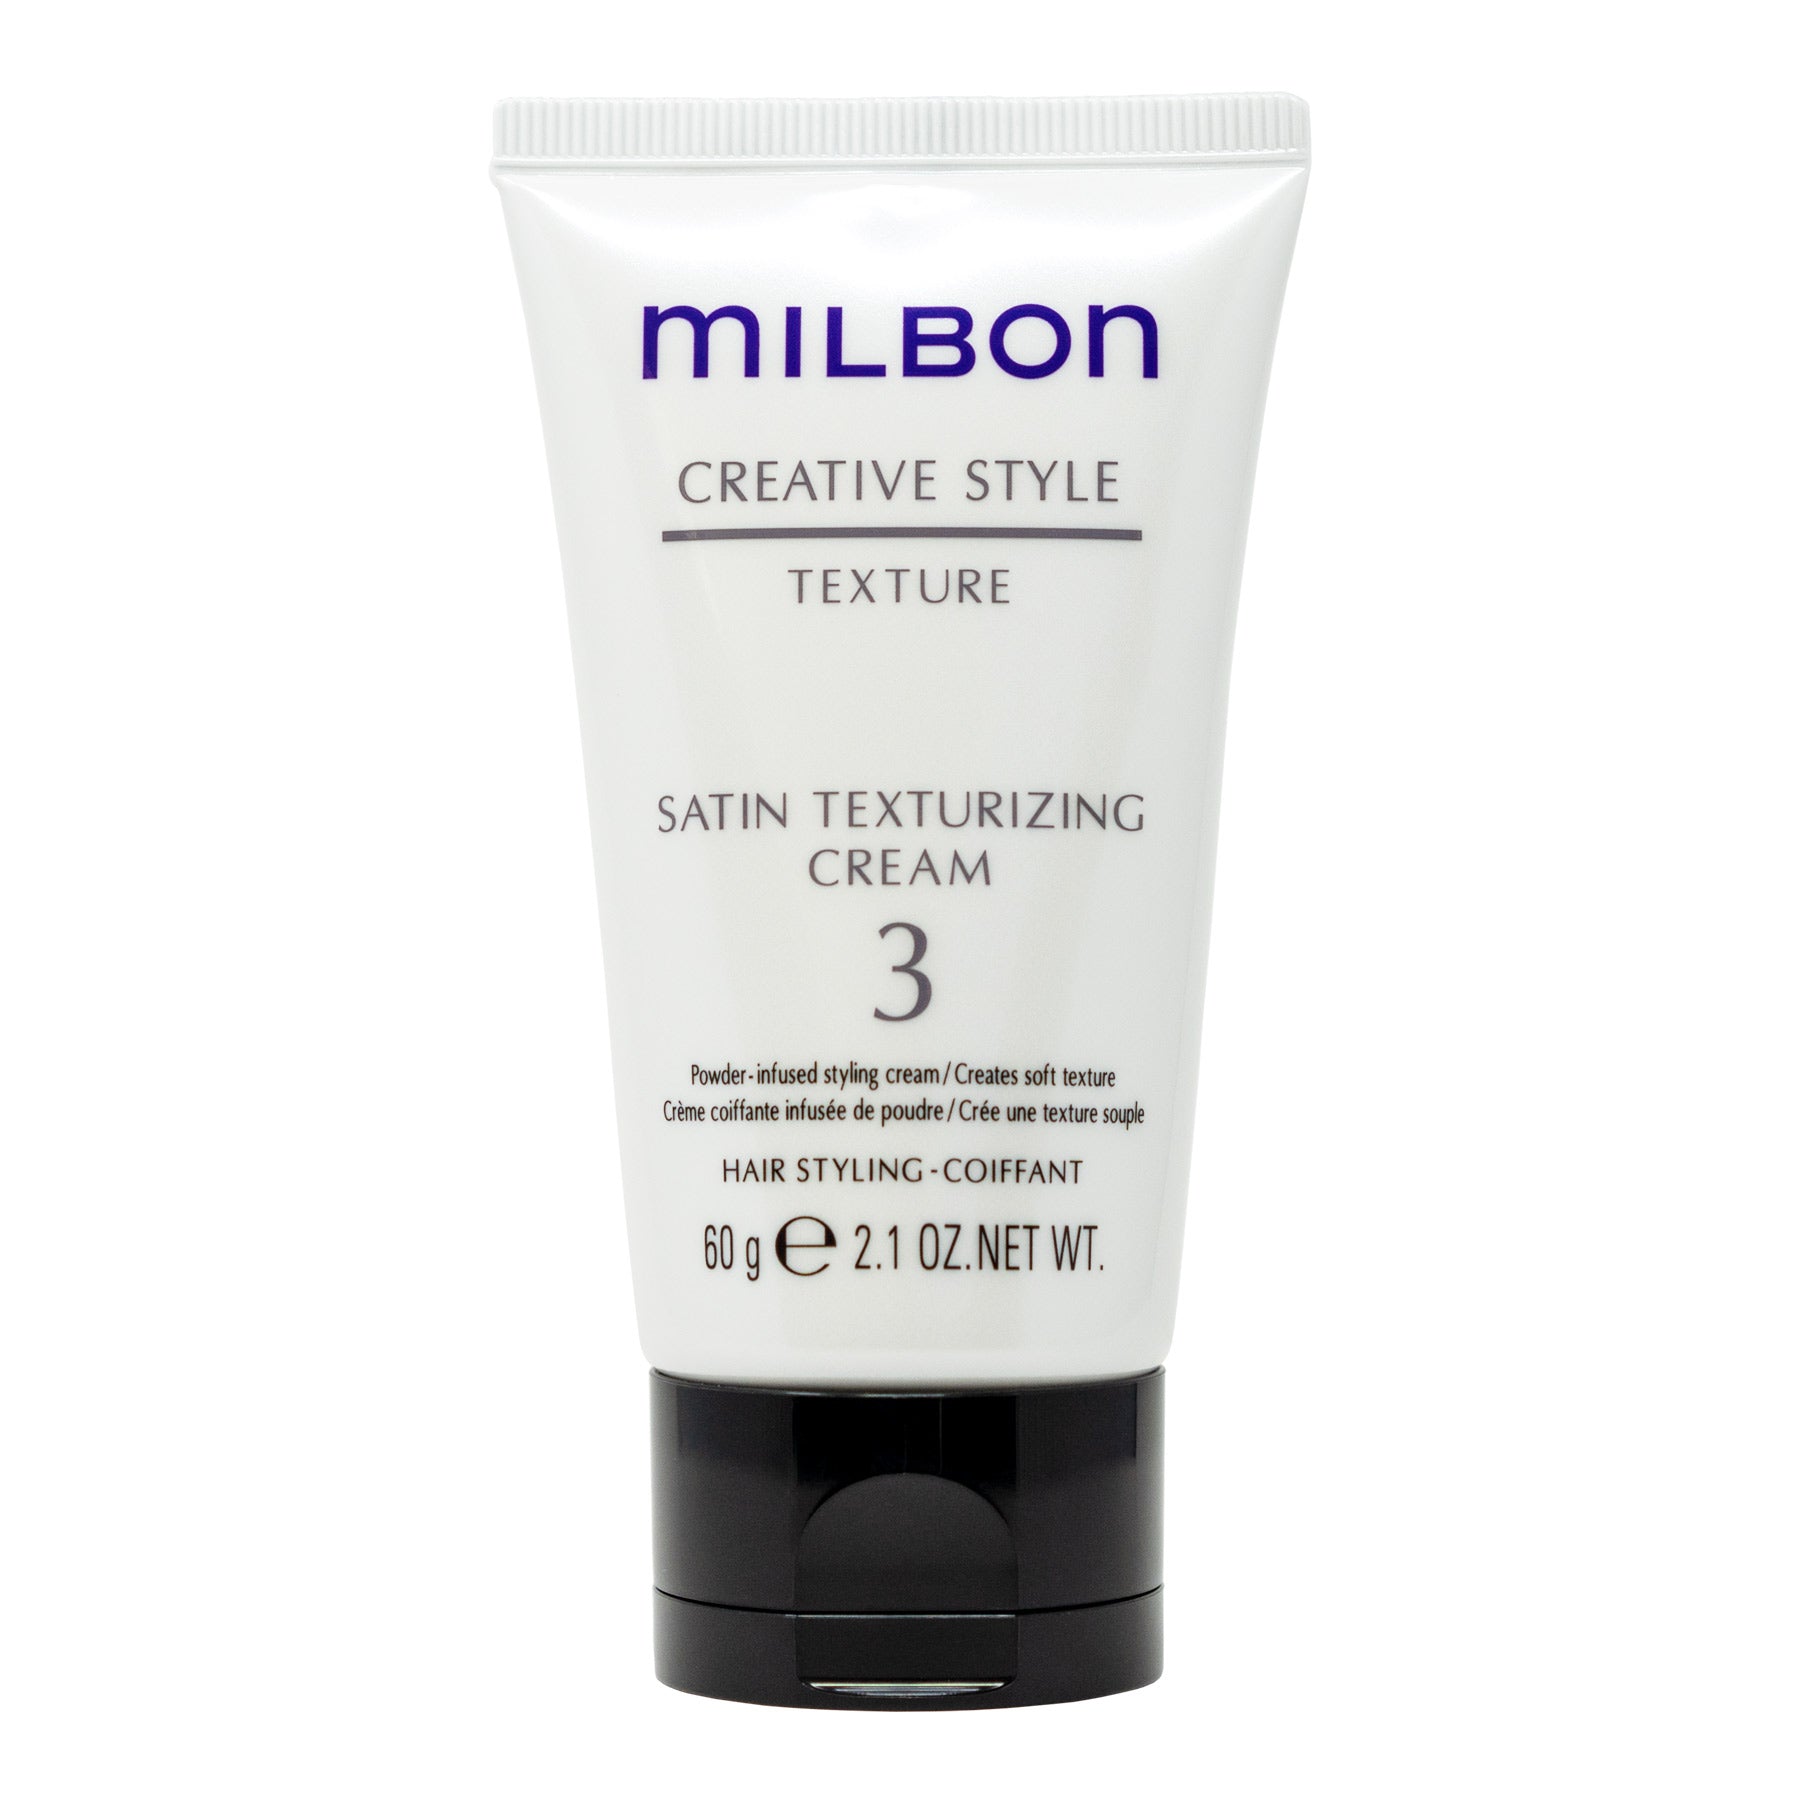 Milbon Creative Style Texture Satin Texturizing Cream 3